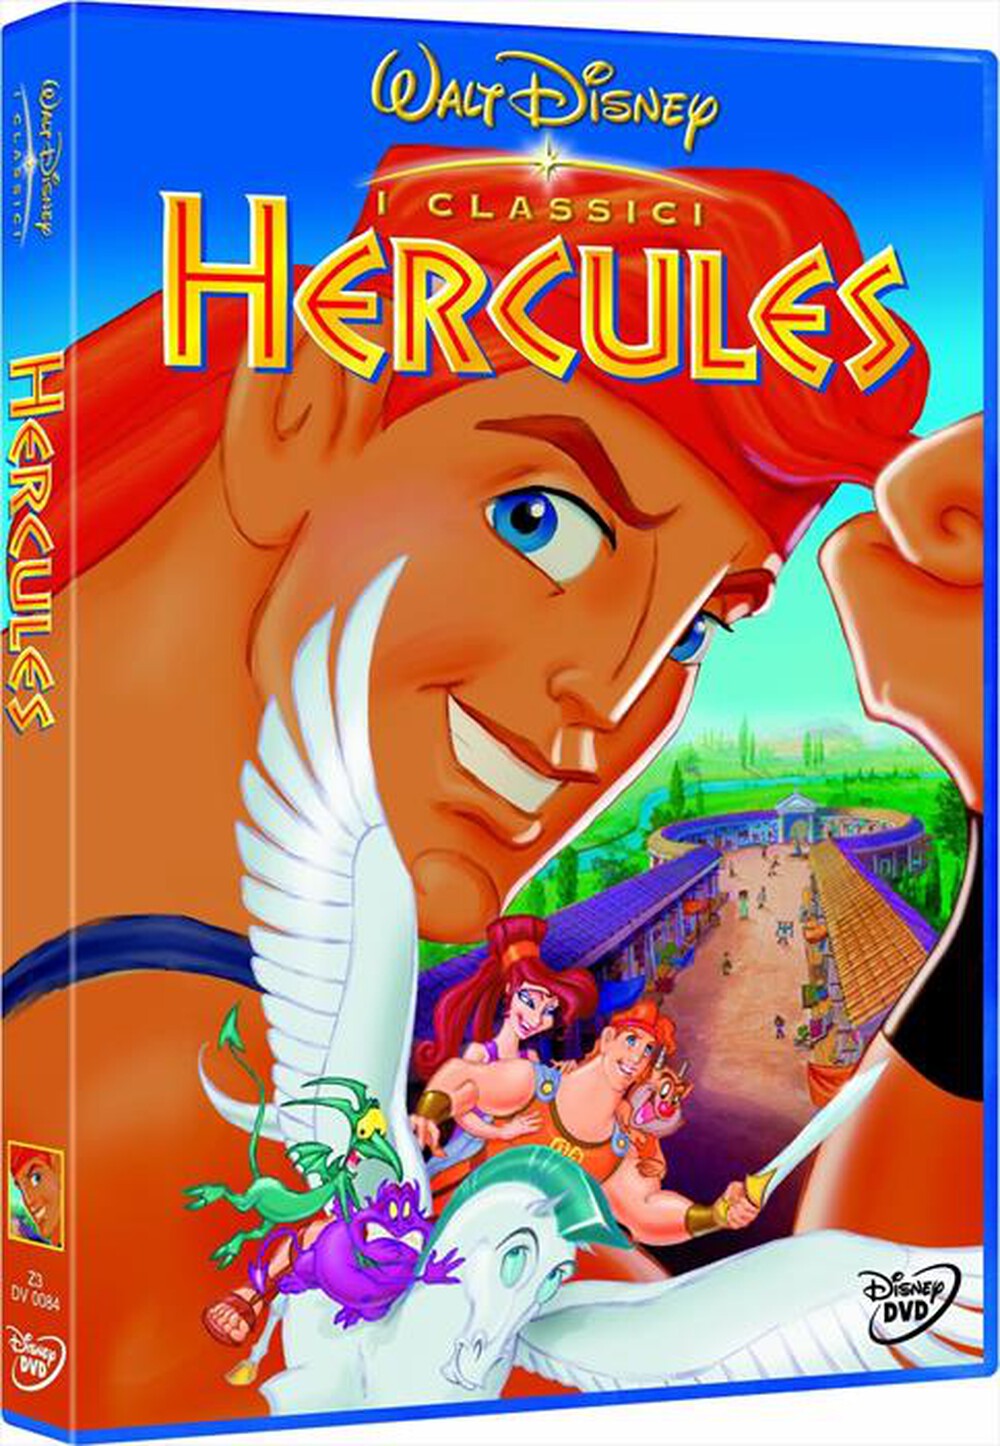 "EAGLE PICTURES - Hercules (Disney)"